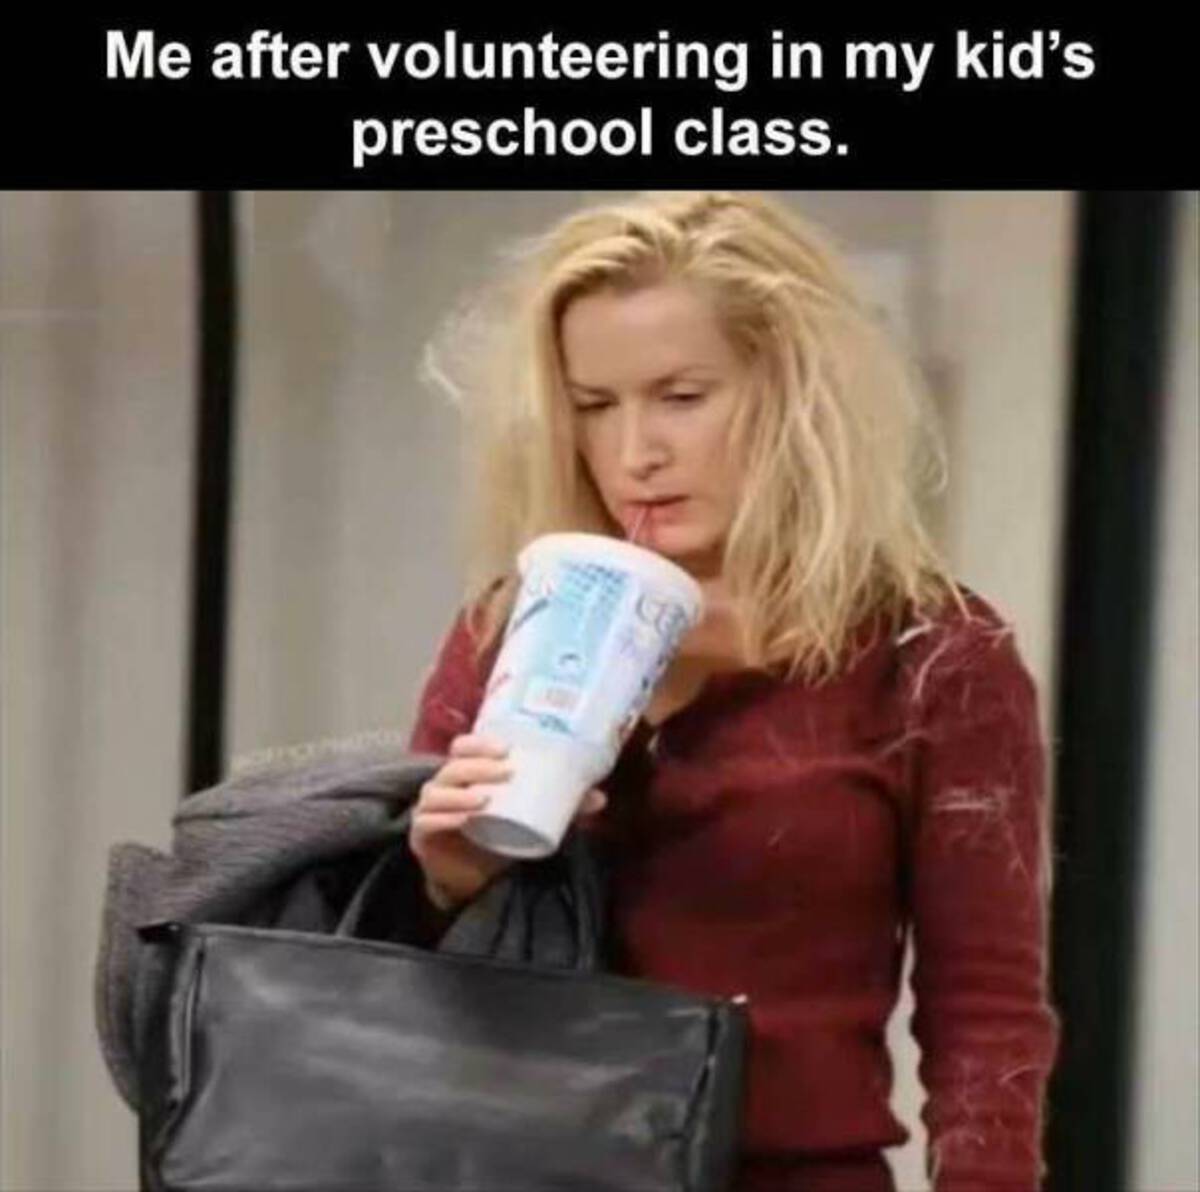 blond - Me after volunteering in my kid's preschool class.